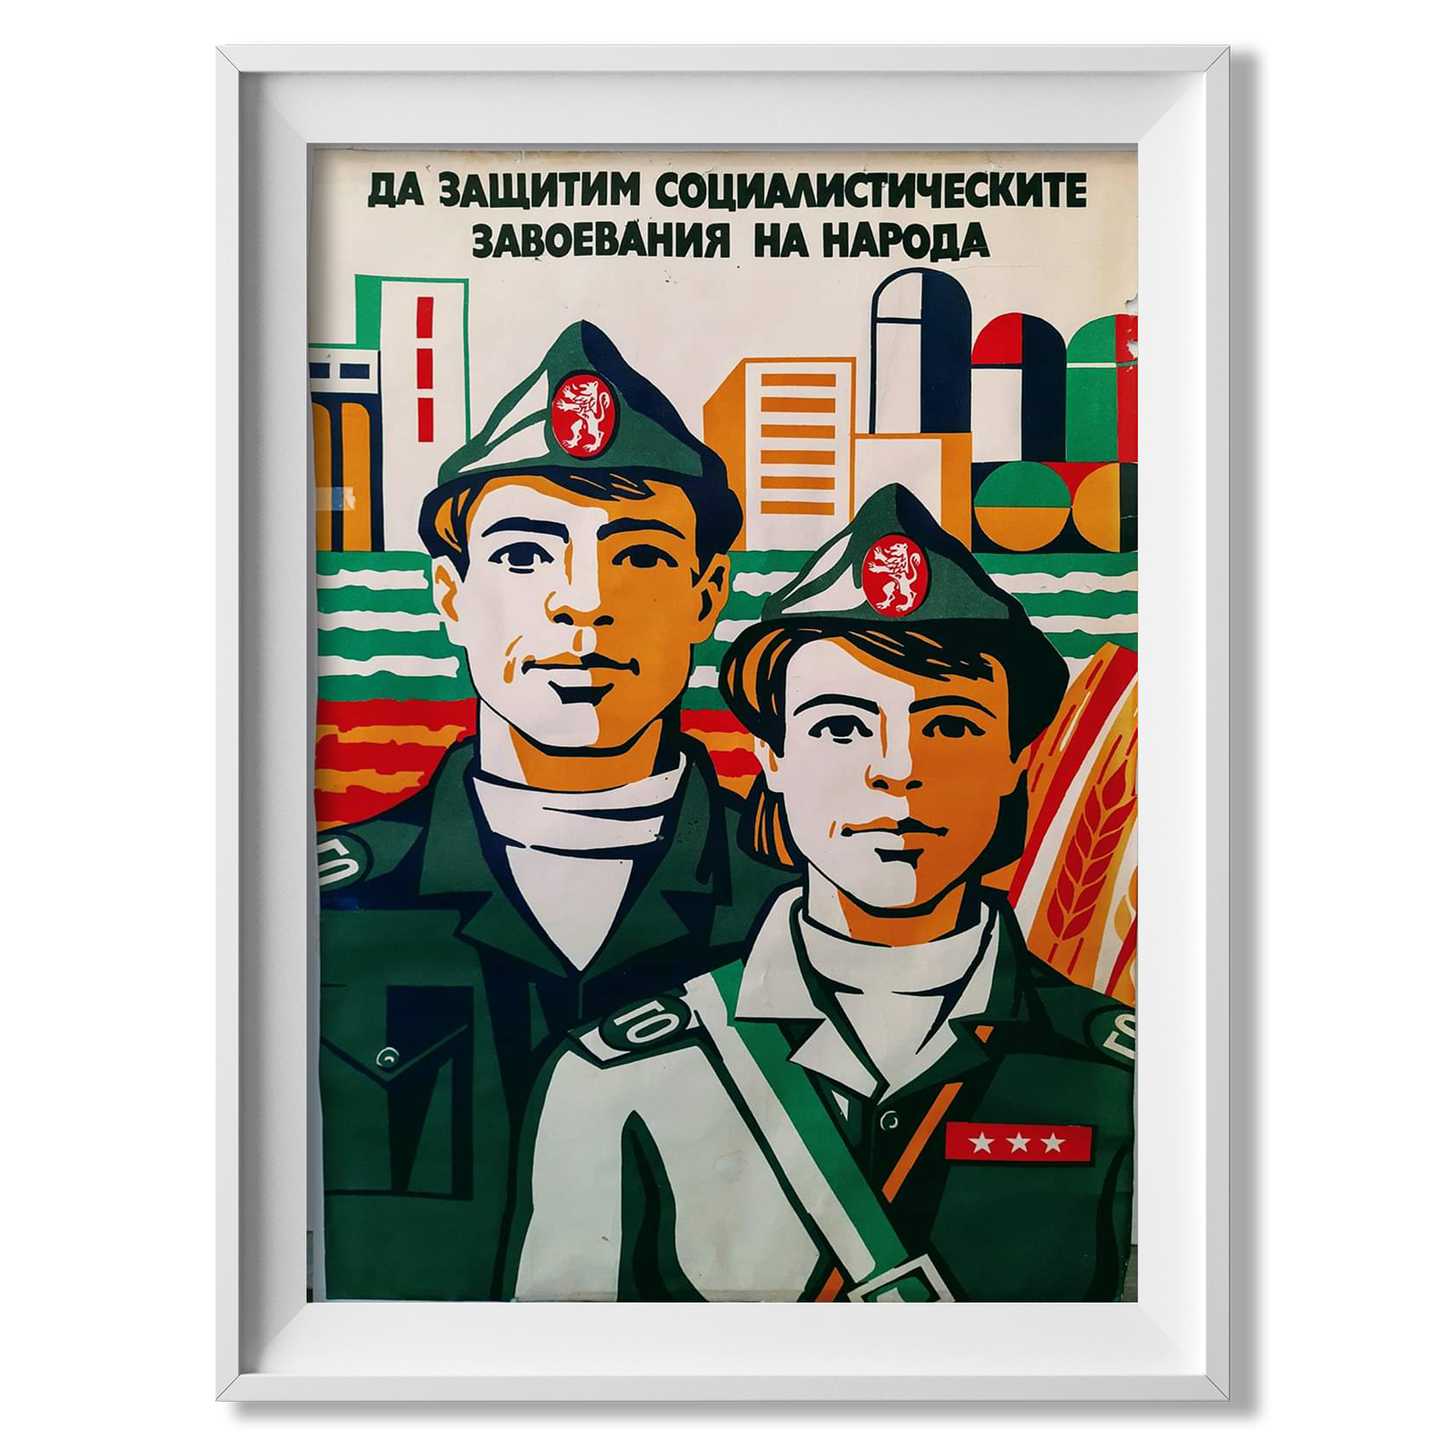 Protect Socialist Accomplishments - Bulgarian Socialist Poster